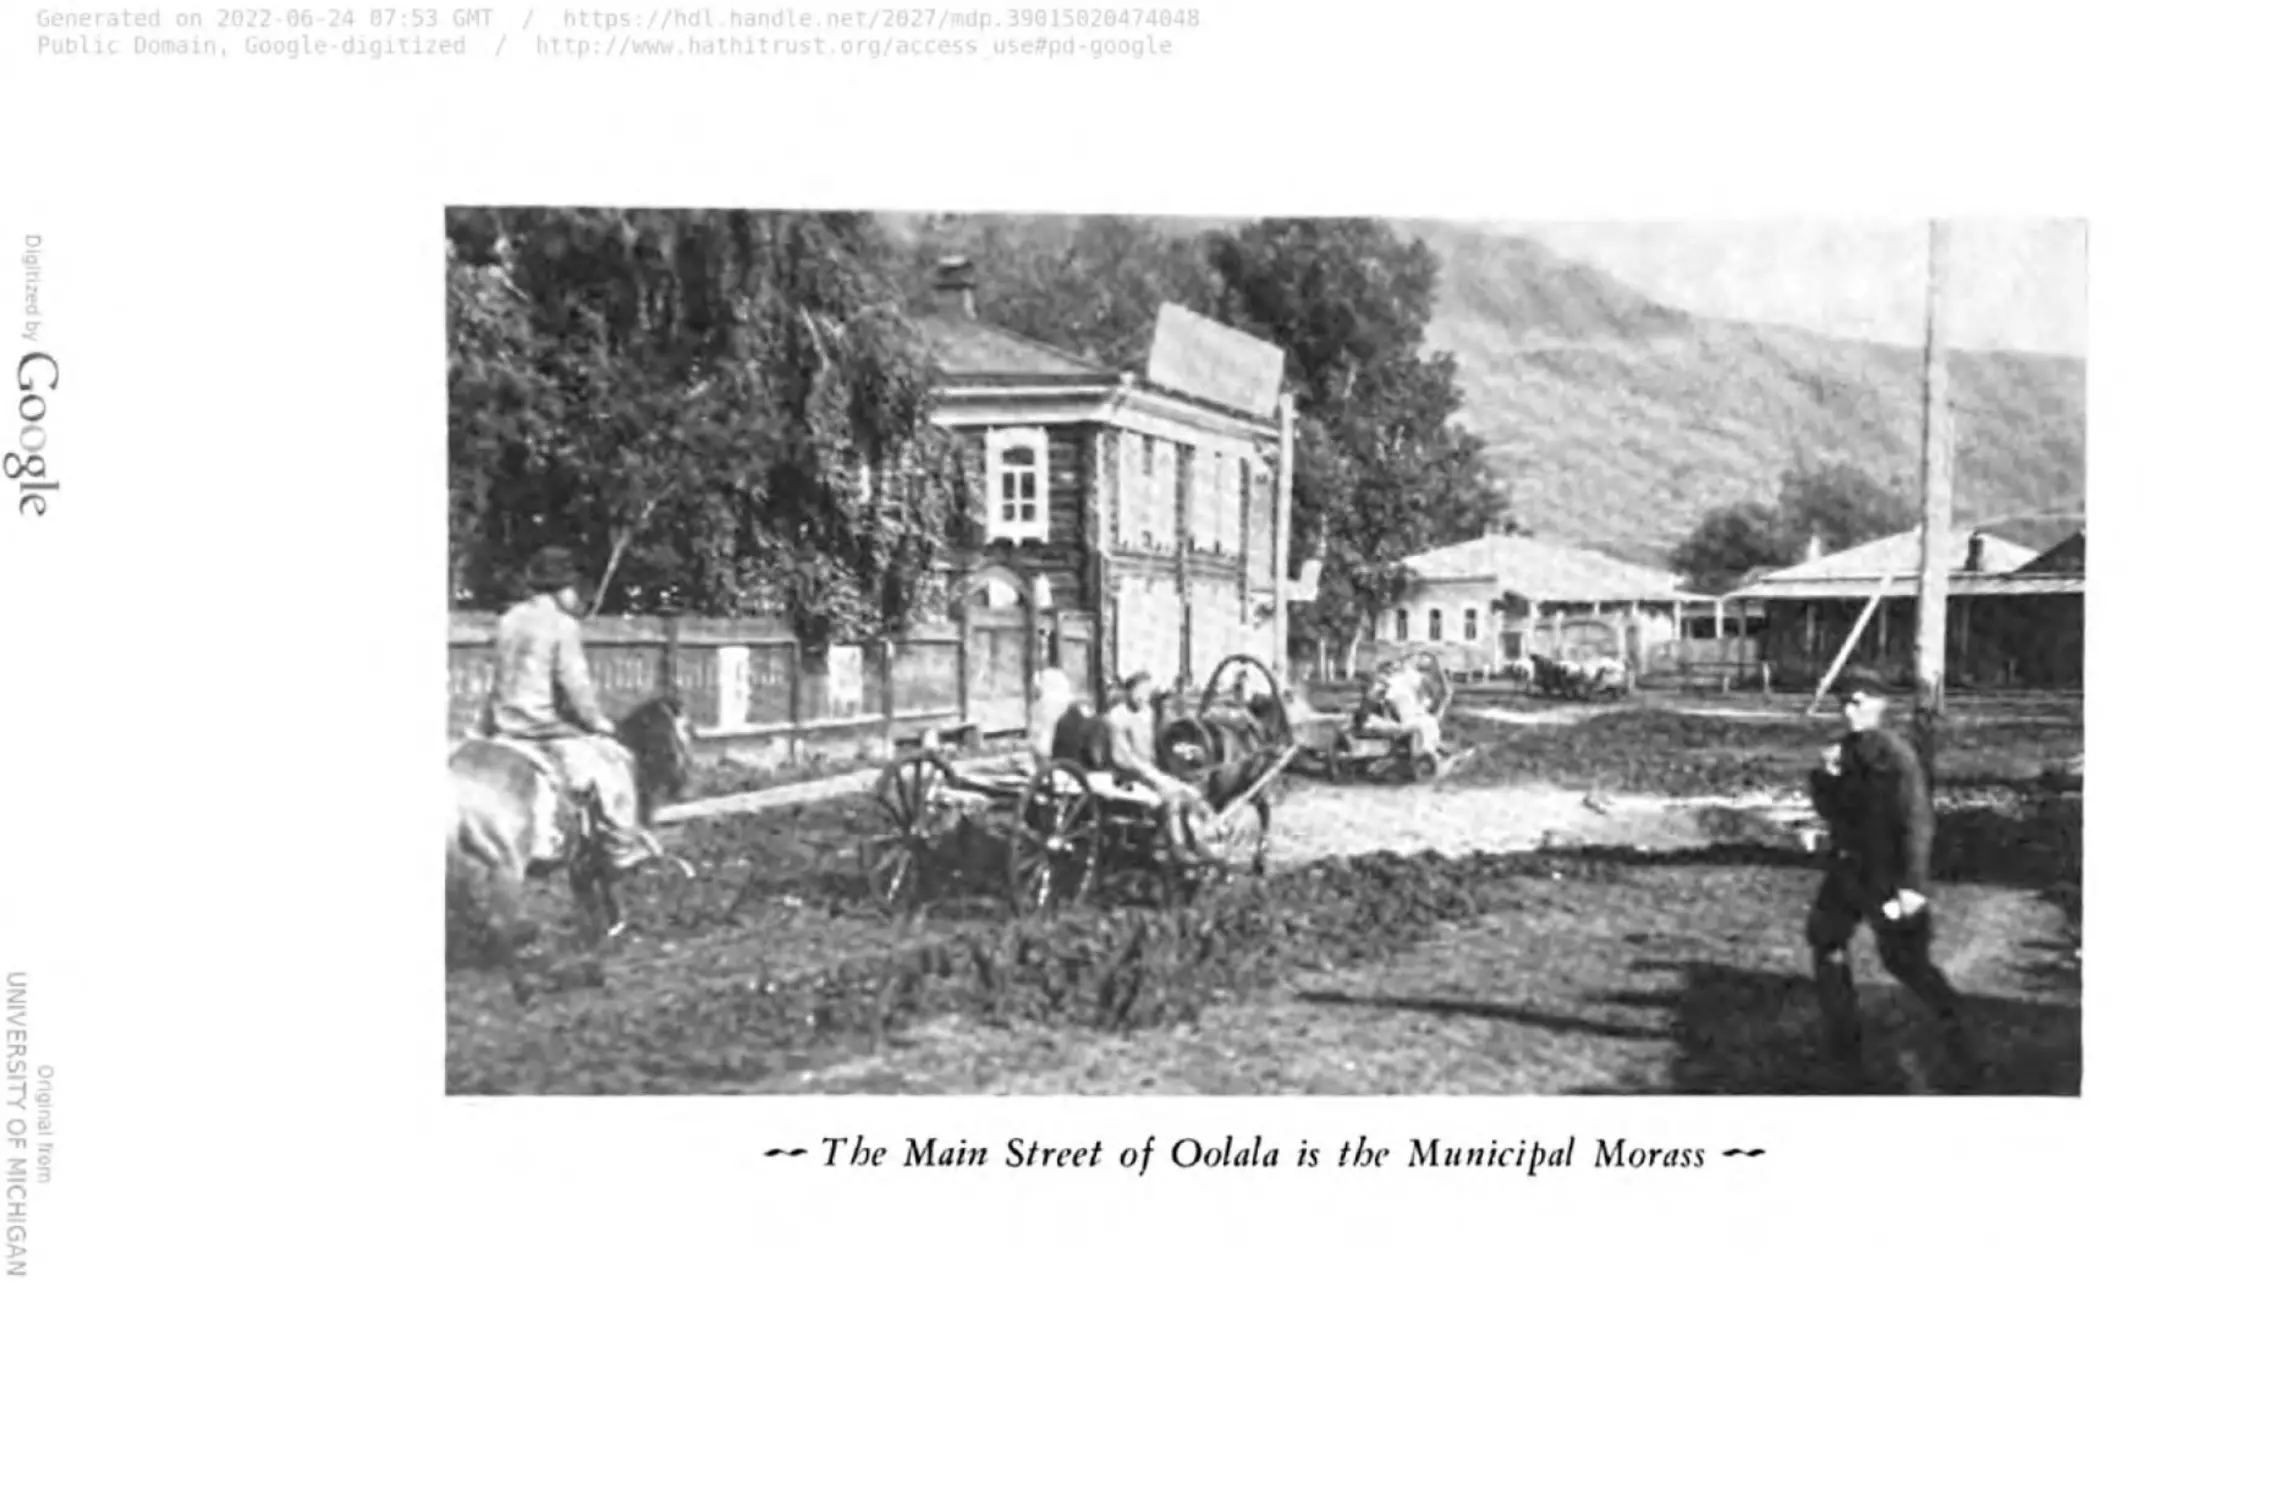 The Main Street of Oolala is the Municipal Morass
The Main Street of Oolala is the Municipal Morass